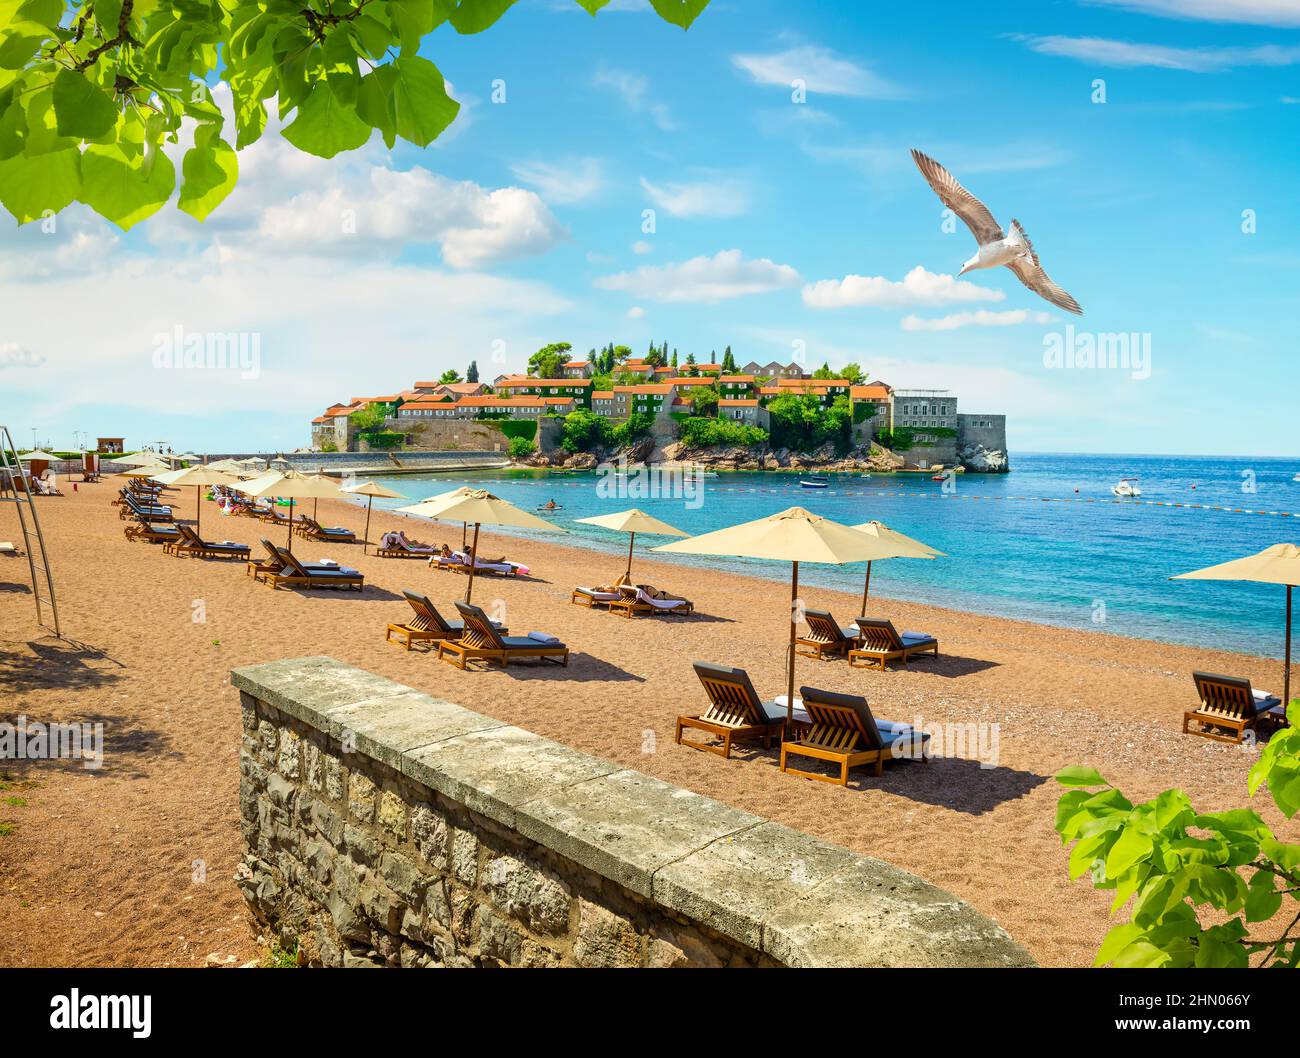 Beach near the island of Sveti Stefan Stock Photo